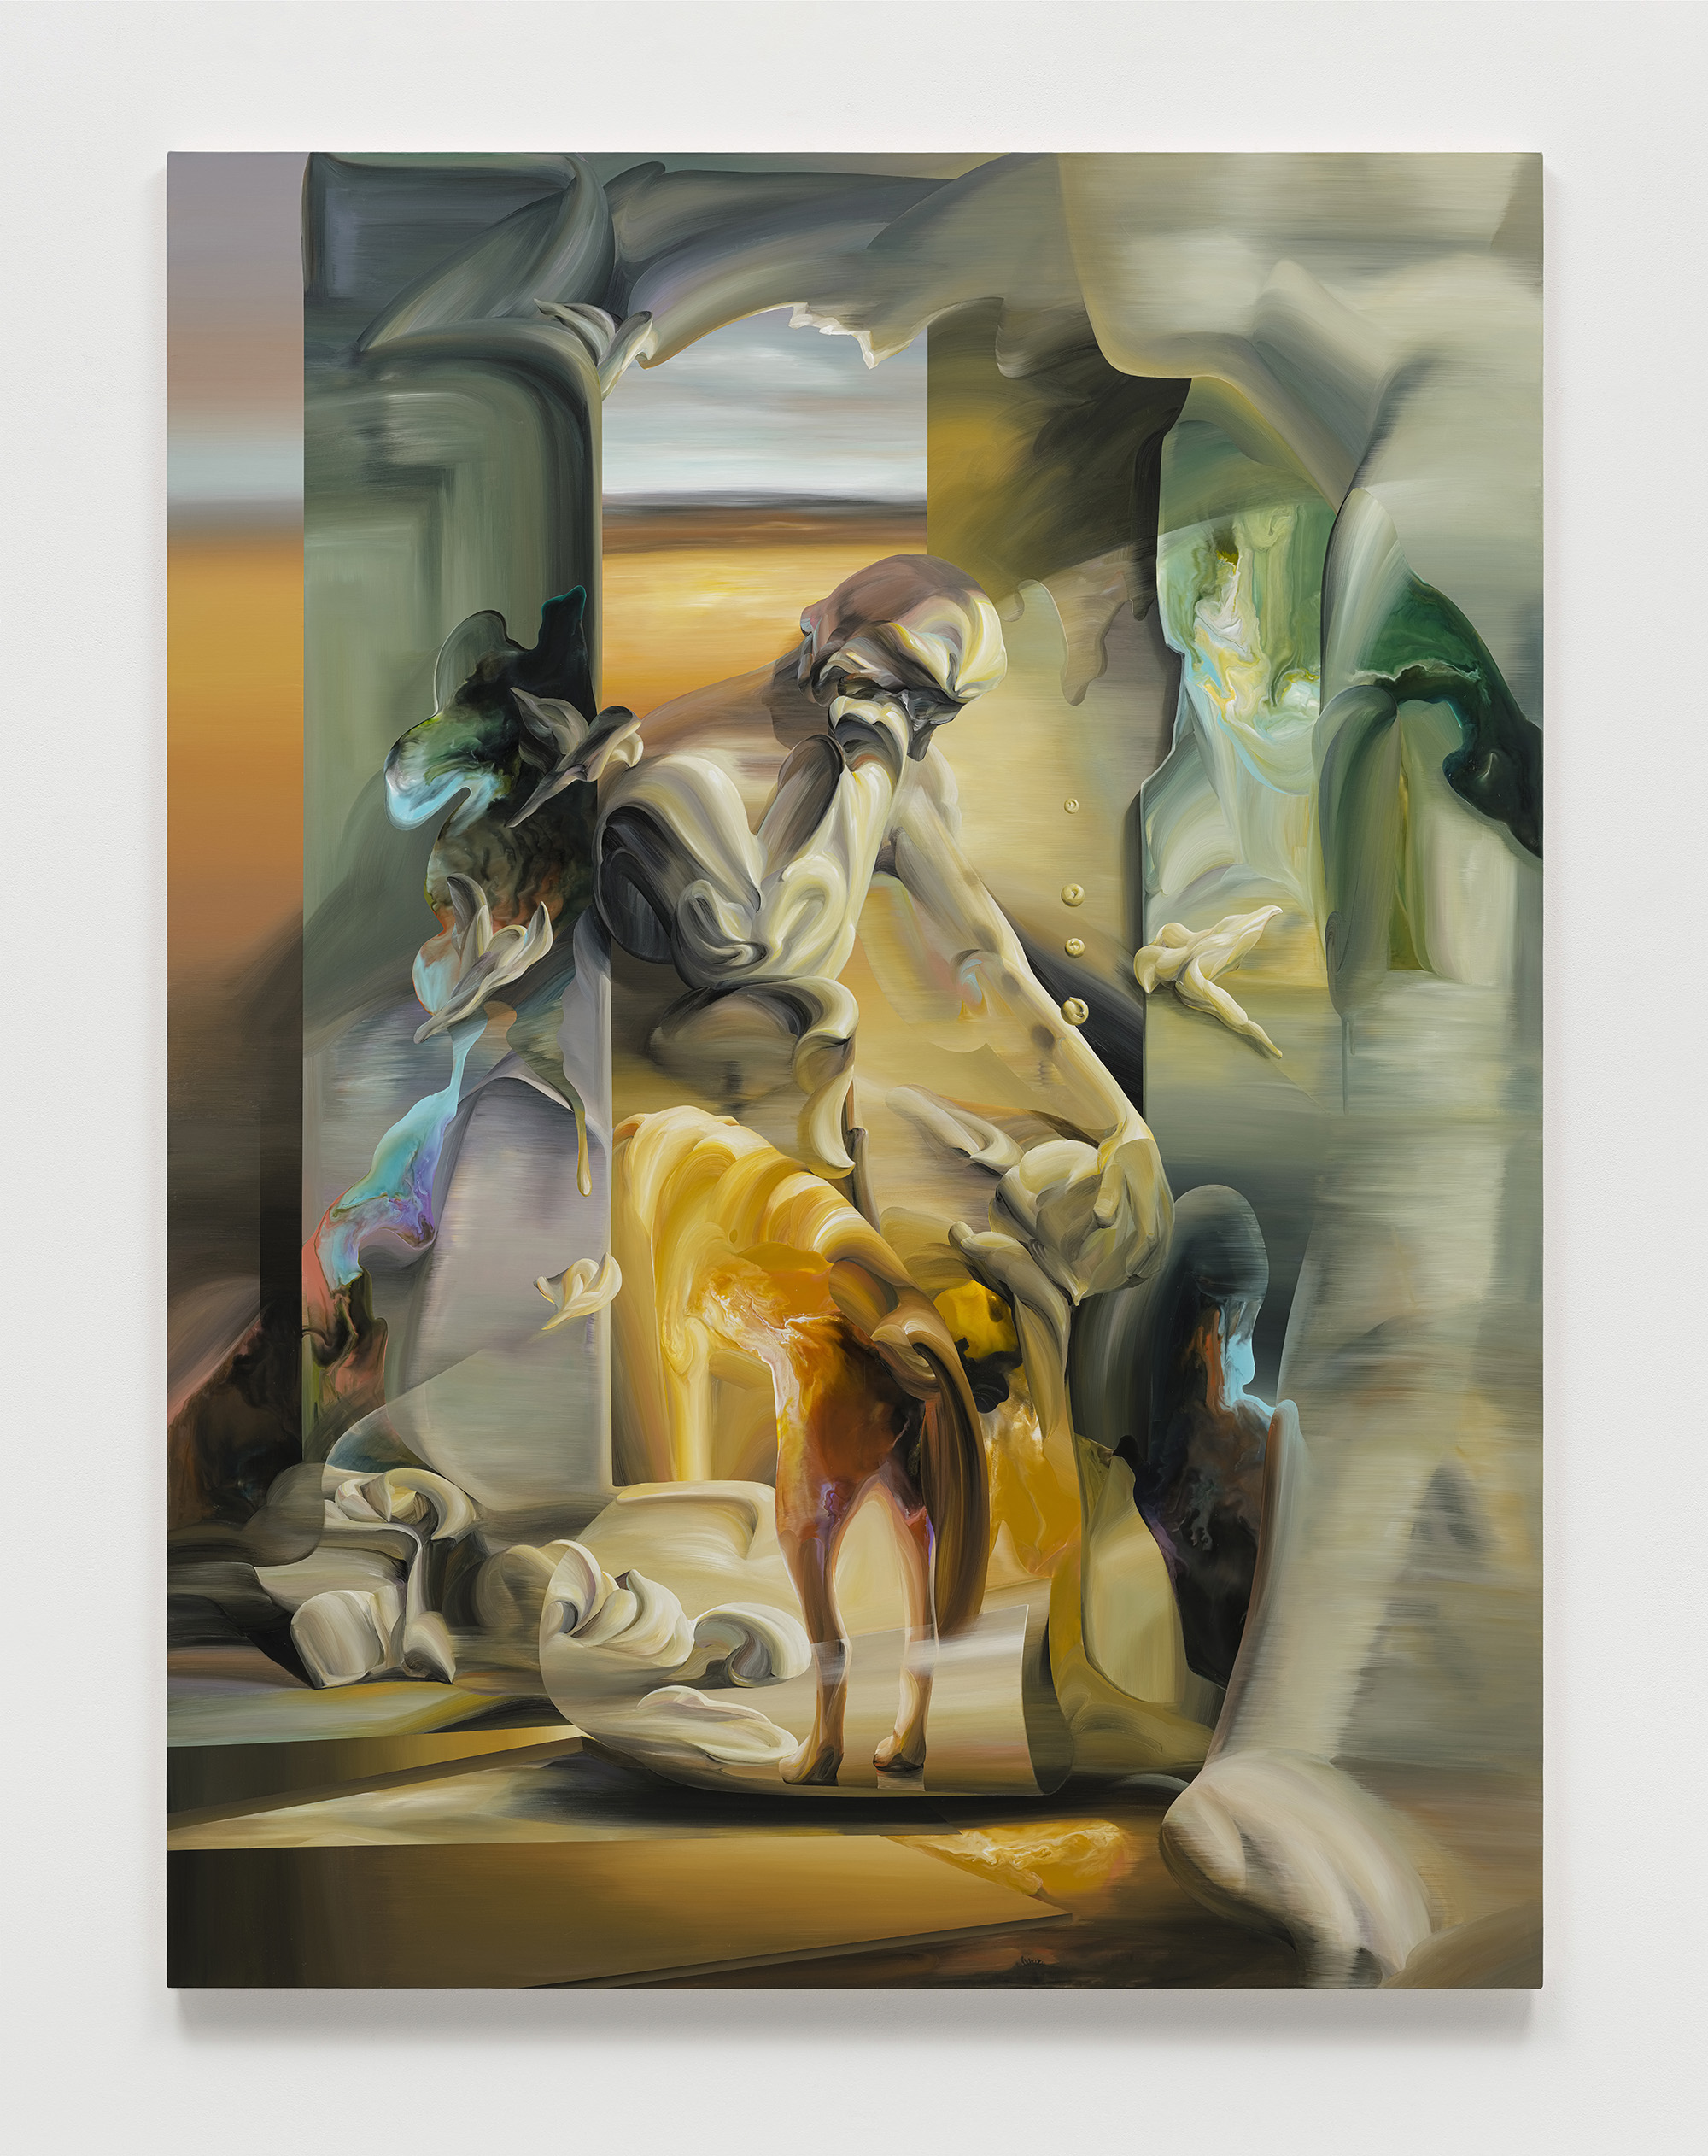 Huang Ko Wei, Fog, 2022, acrylic on canvas, 180 x 135 cm